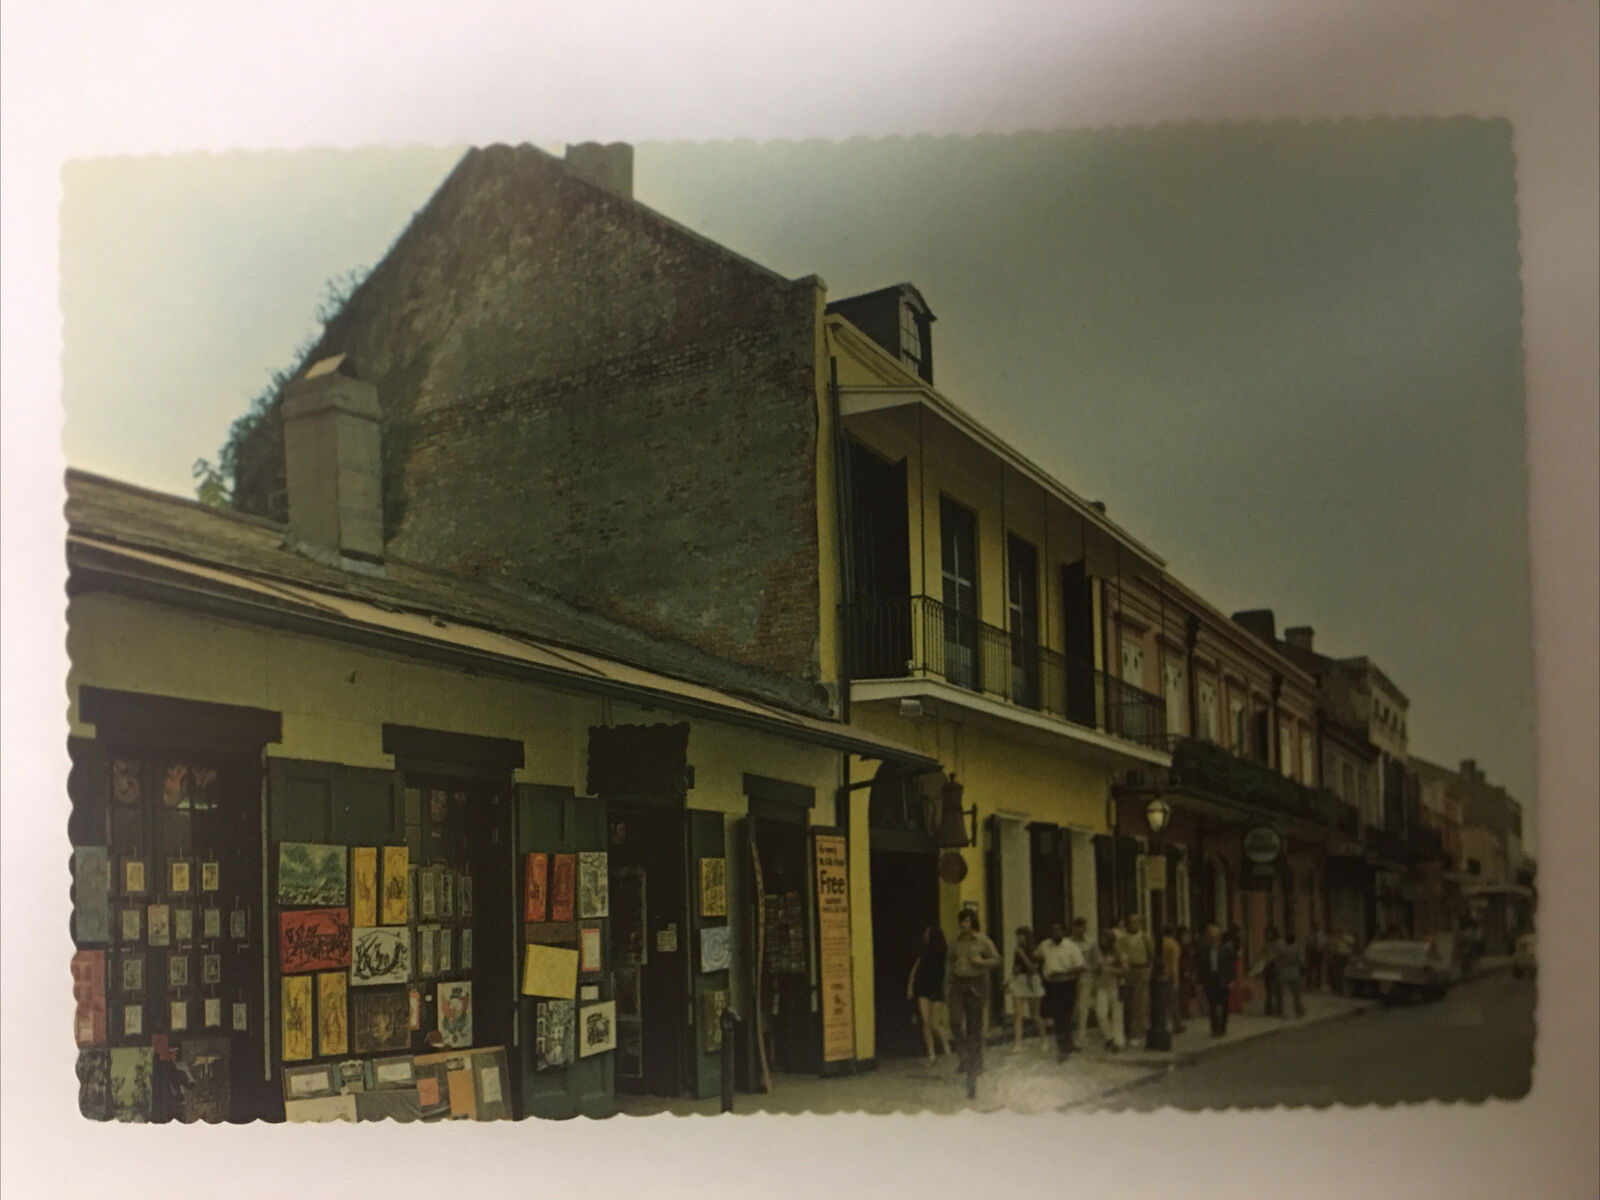 St. Peter St. New Orleans Louisiana Vintage Postcard